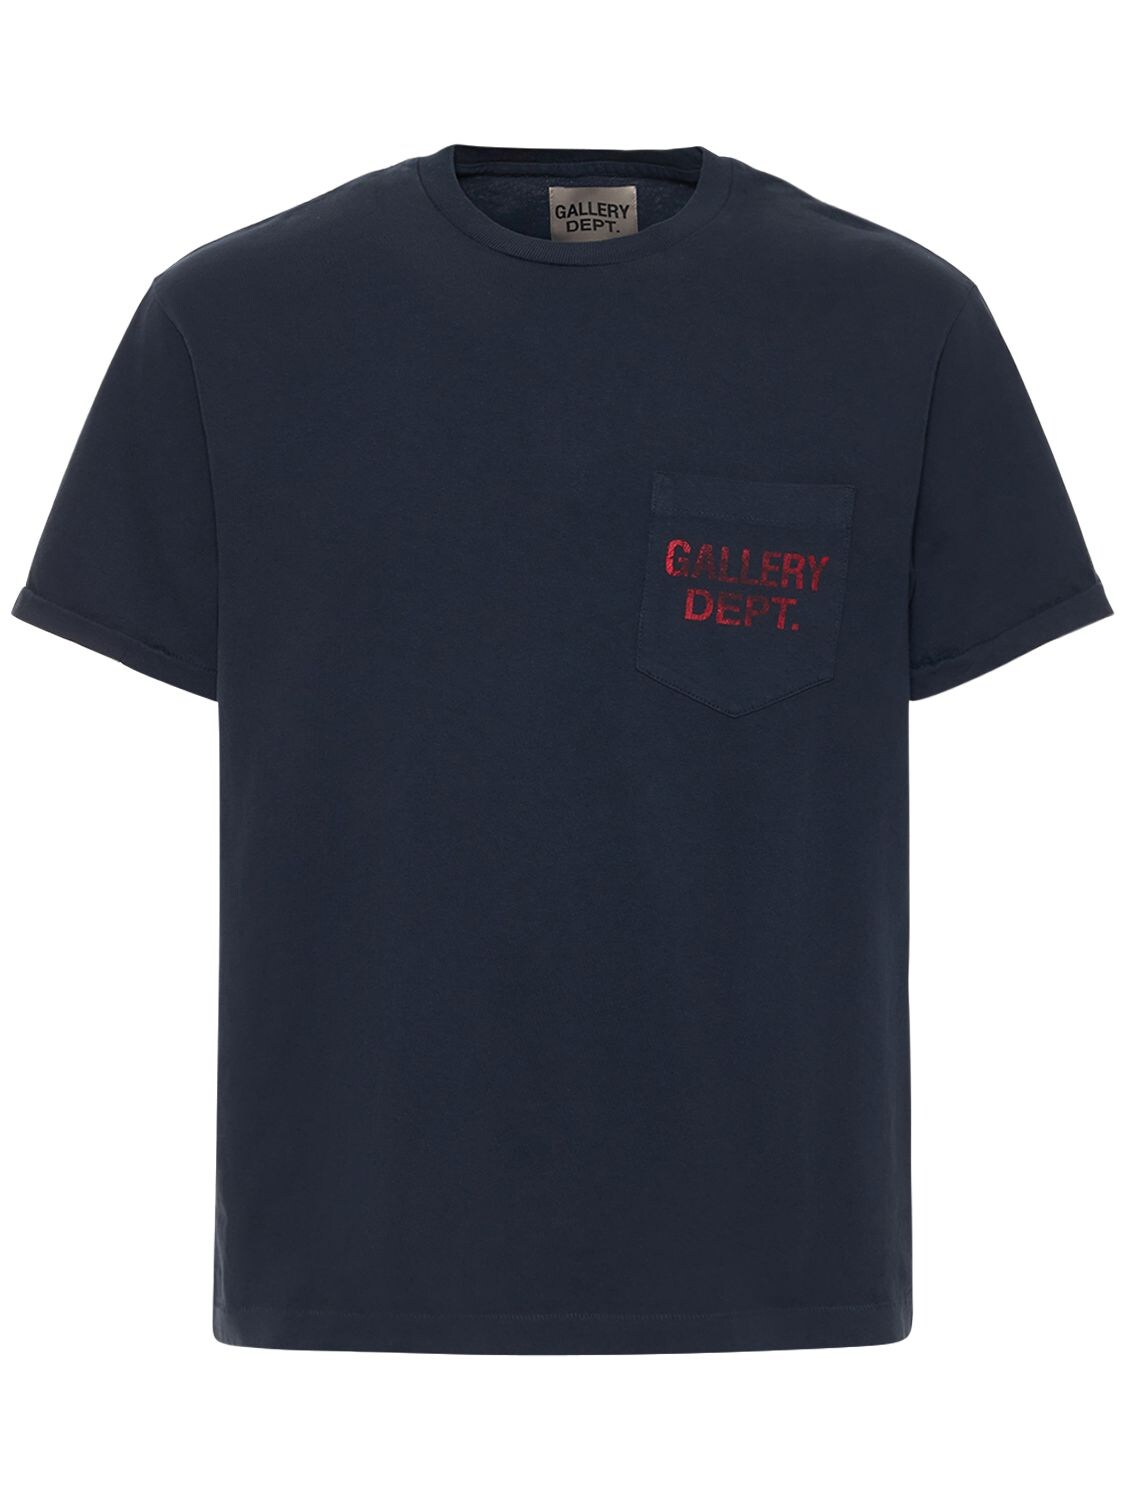 Gallery Dept. Cotton T-shirt W/ Pocket